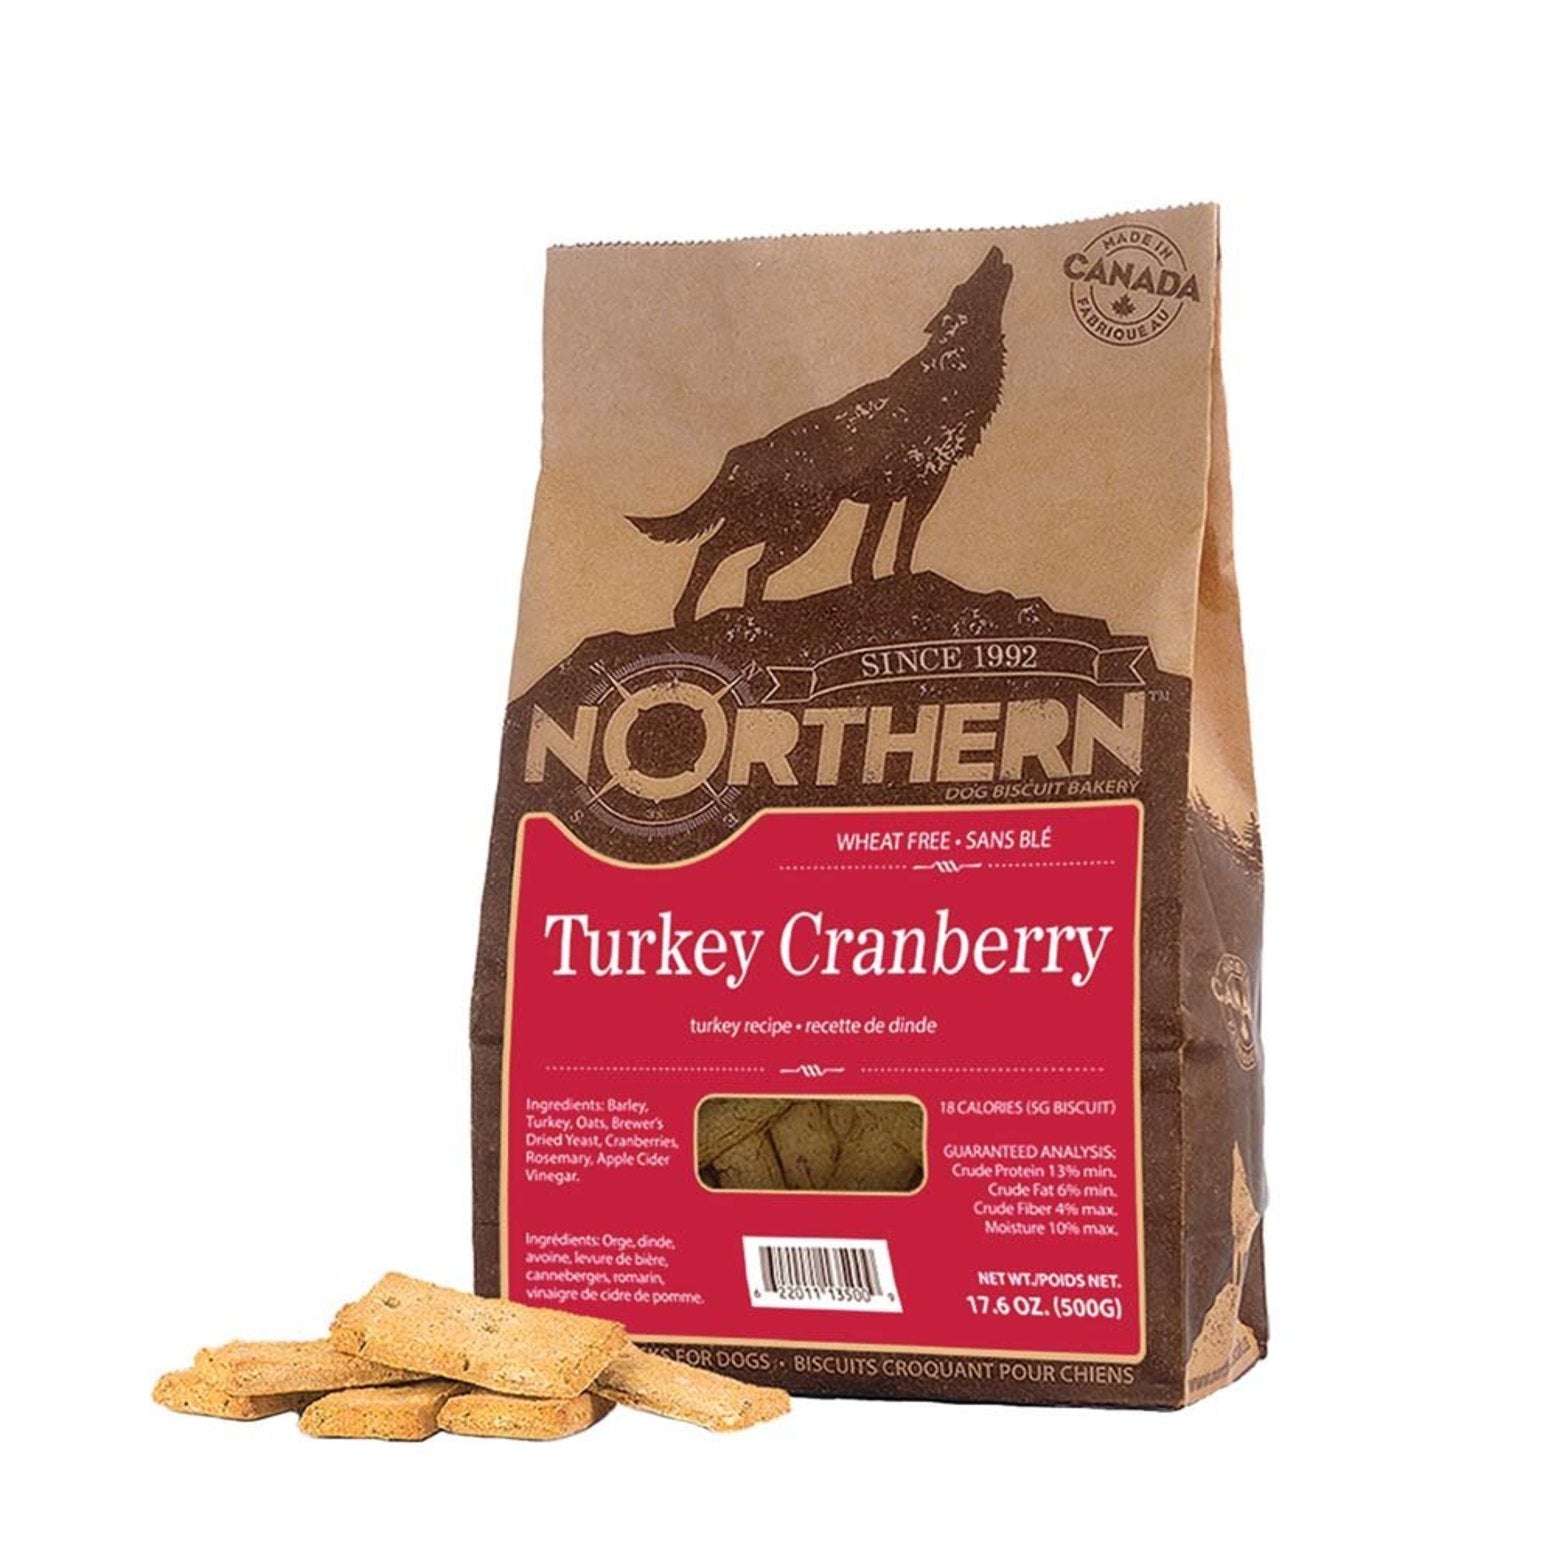 Northern Wheat Turkey Cranberry (500g)